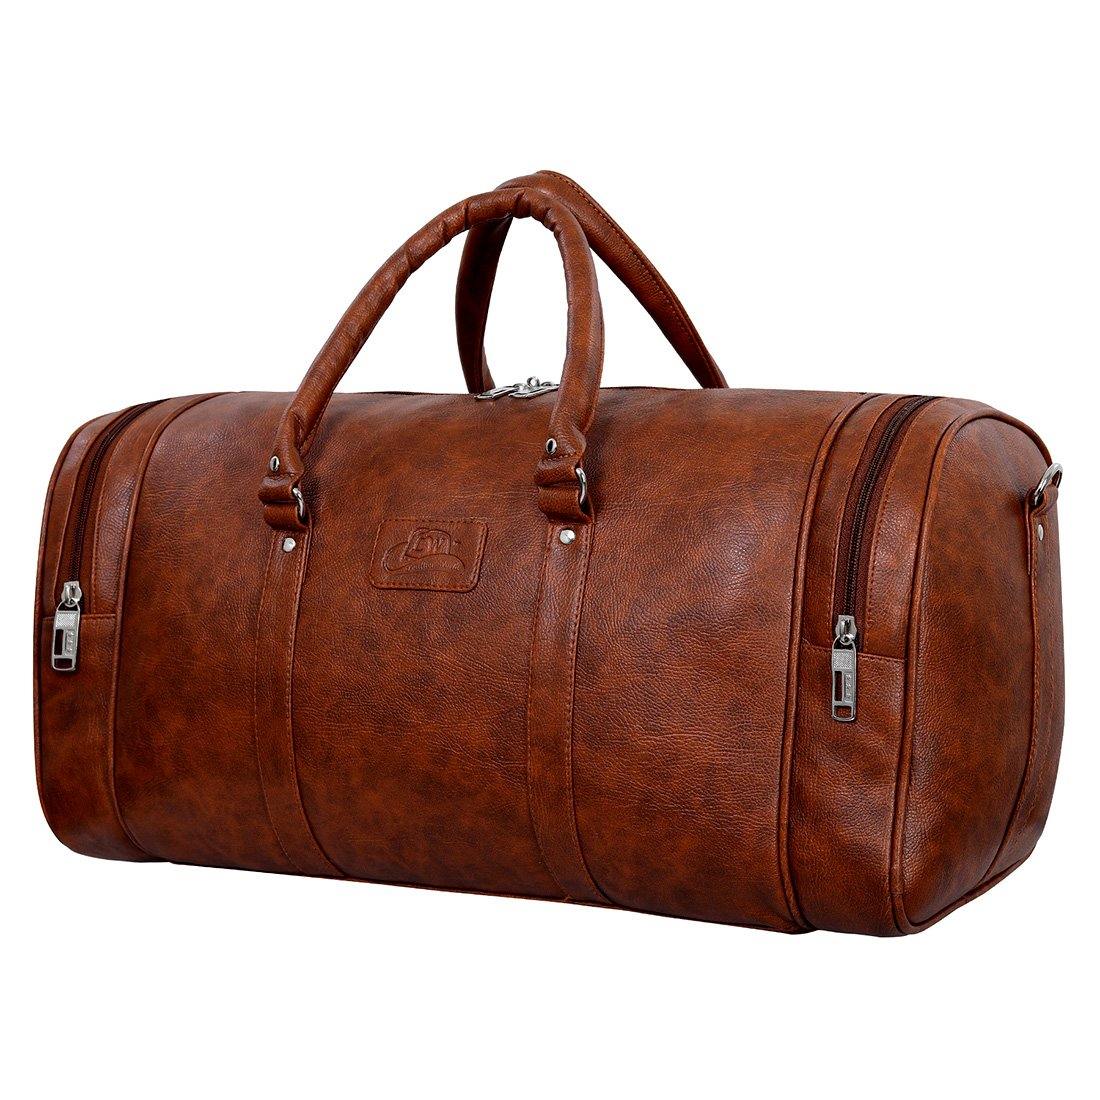 Luxurious PU leather Duffel Bag - Leatherworldonline.net